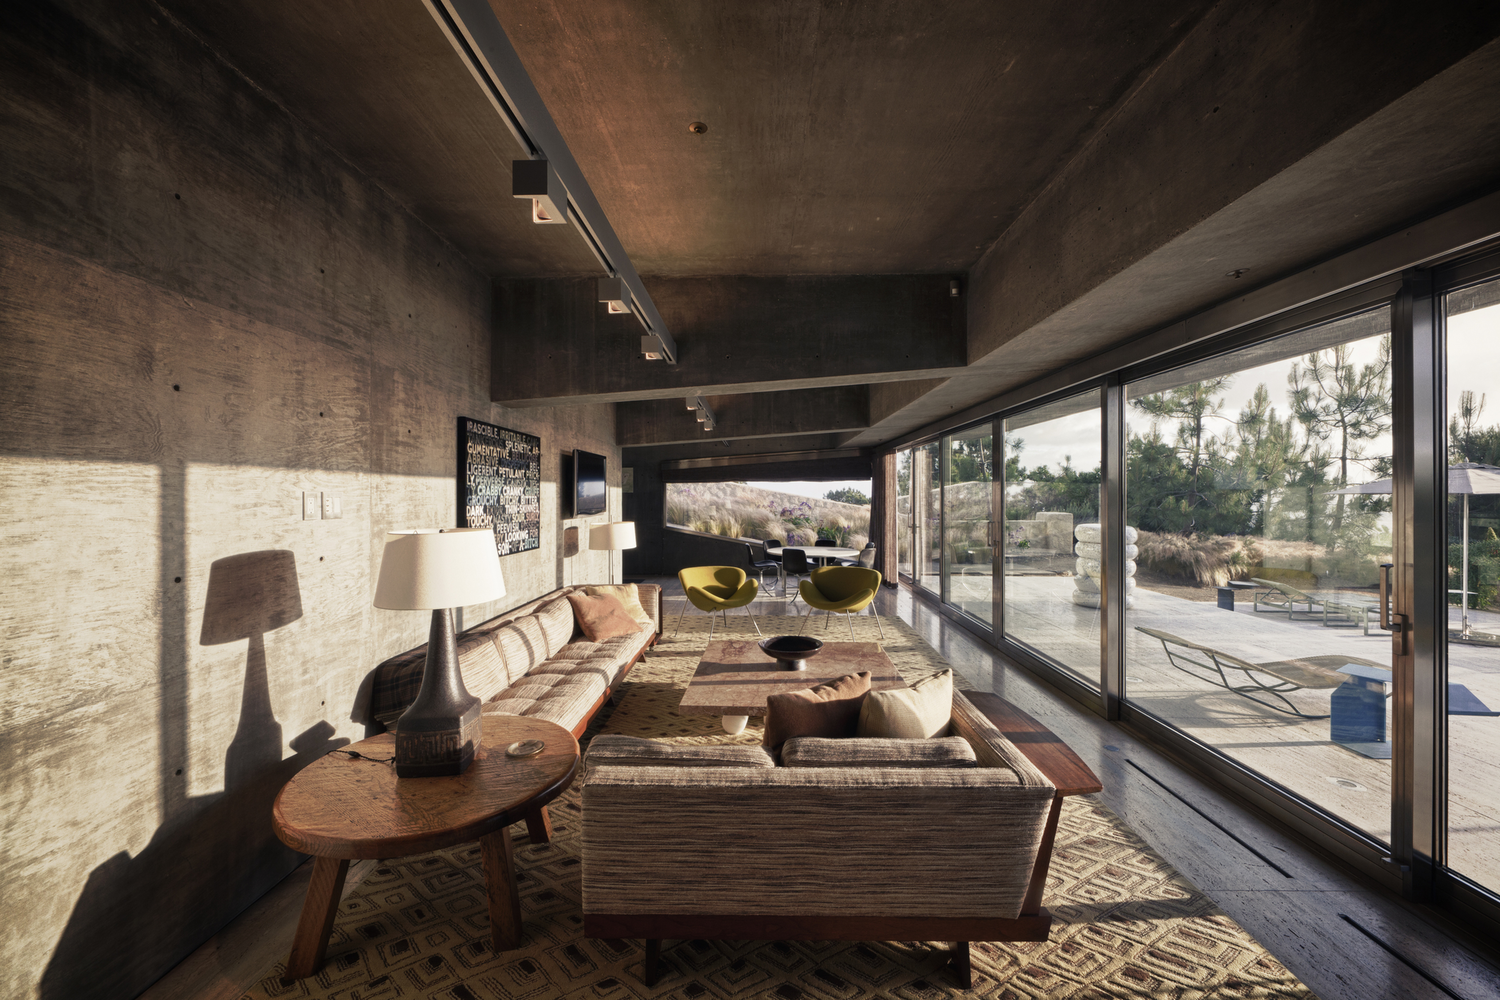 General 1500x1000 modern interior interior design living rooms window concrete natural light beige